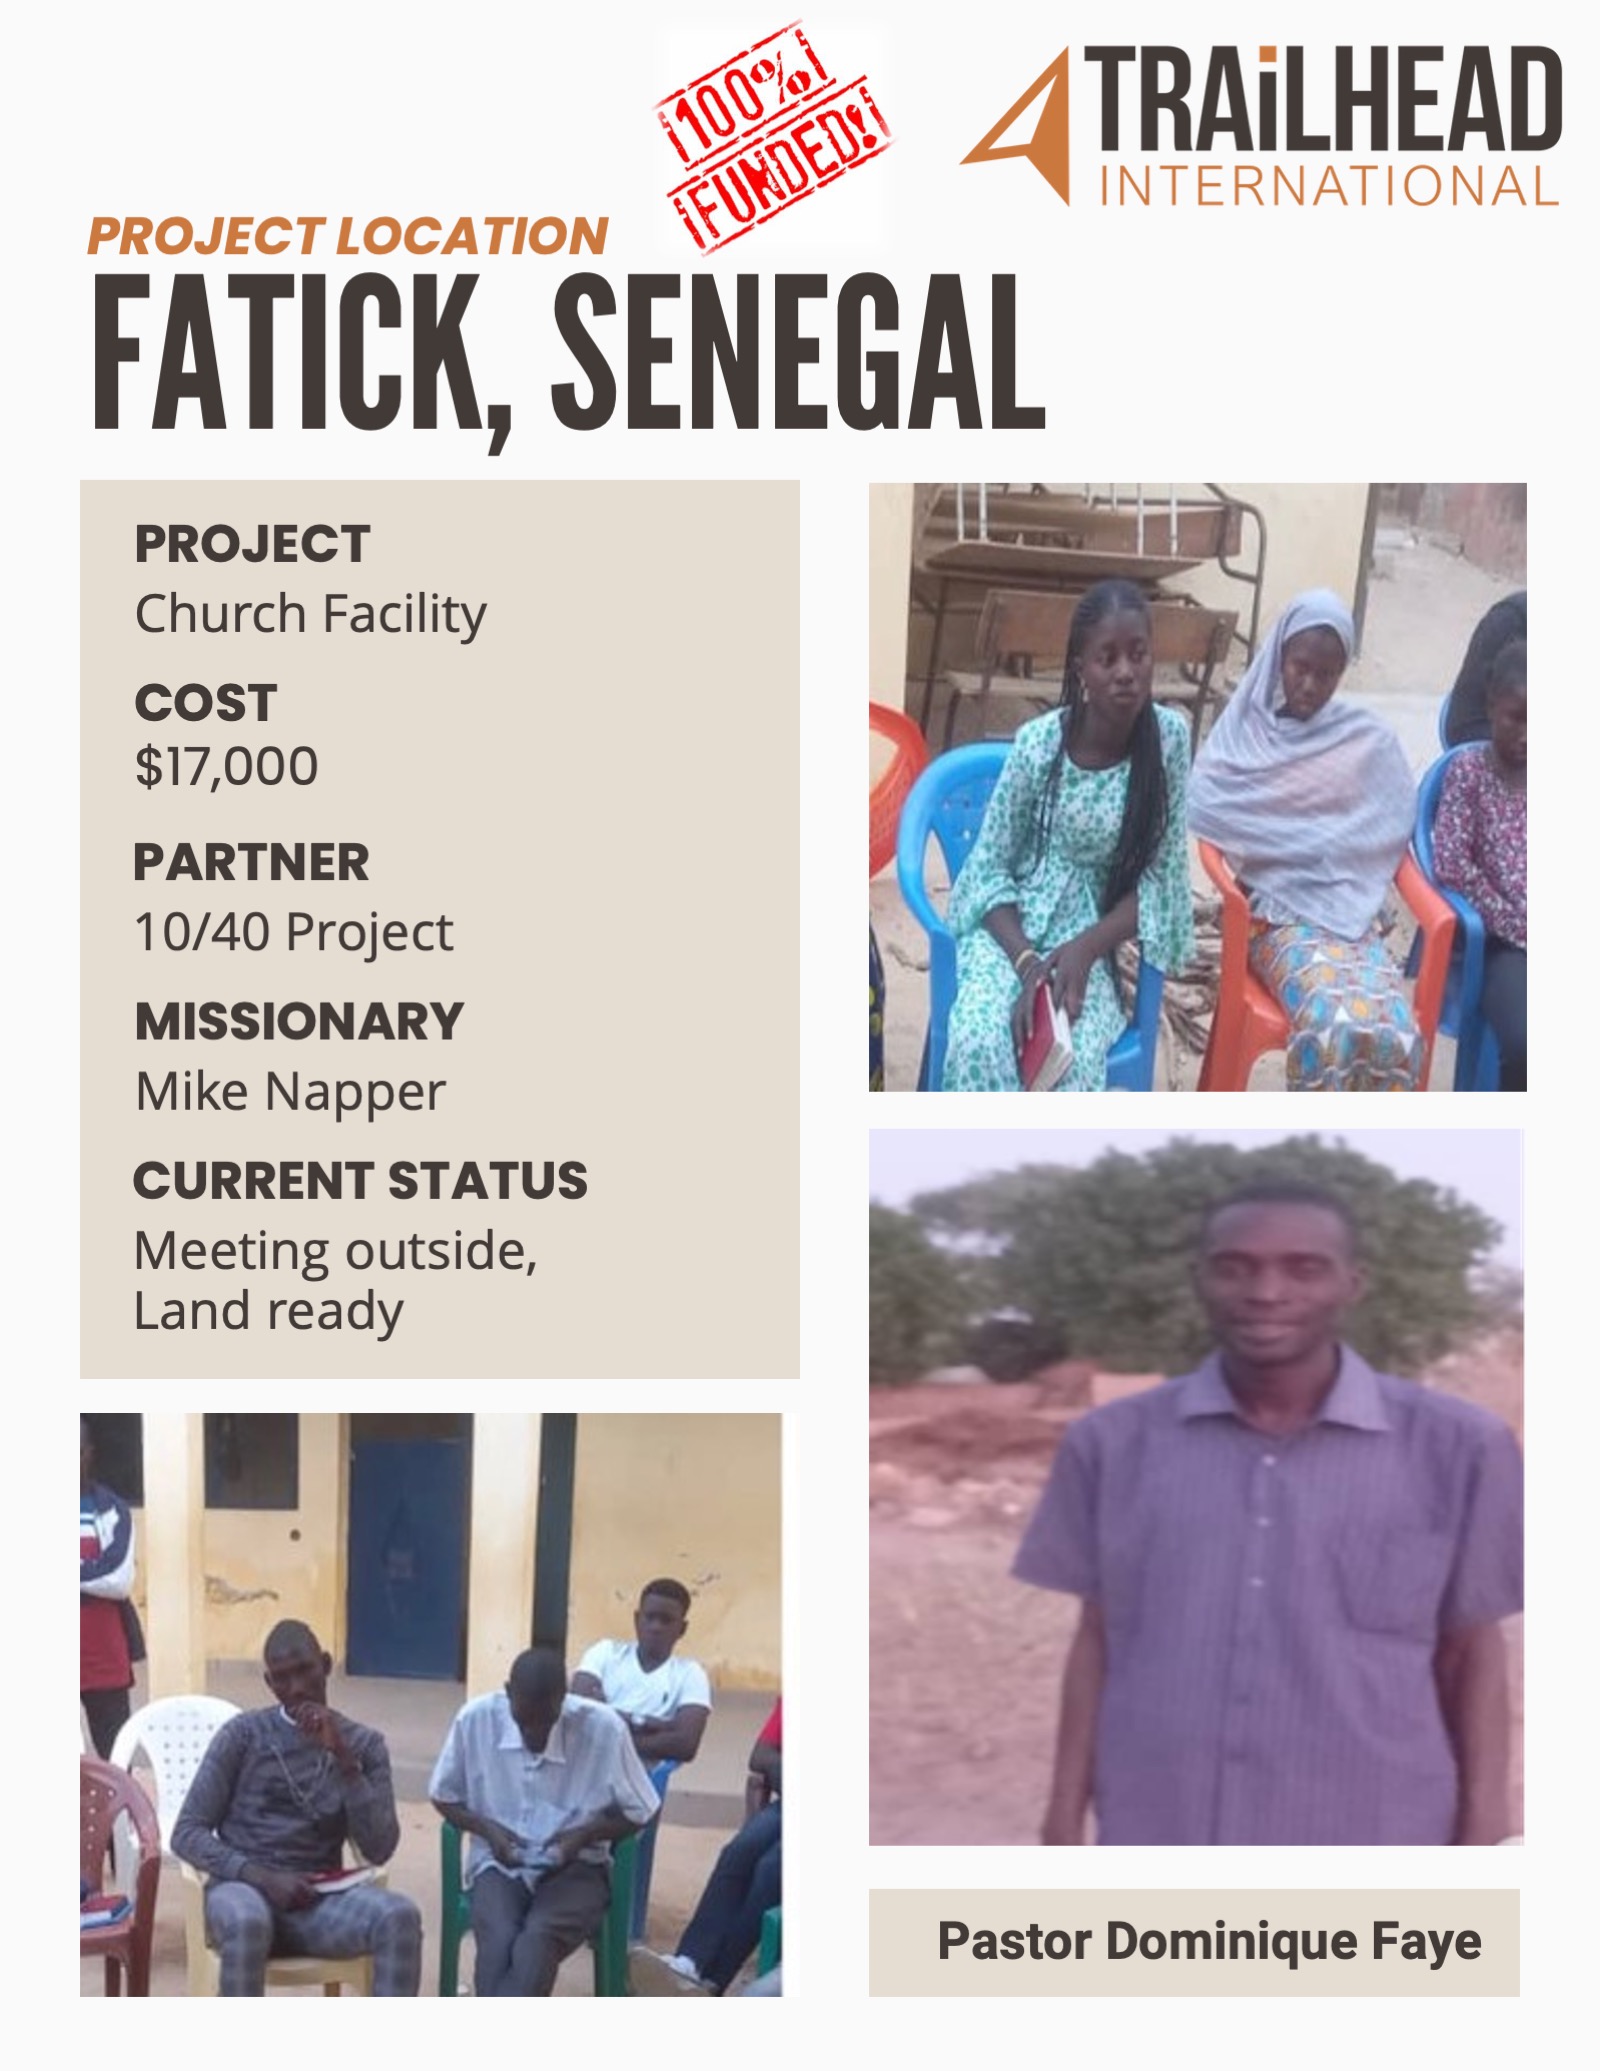 Fatick, Senegal congregation